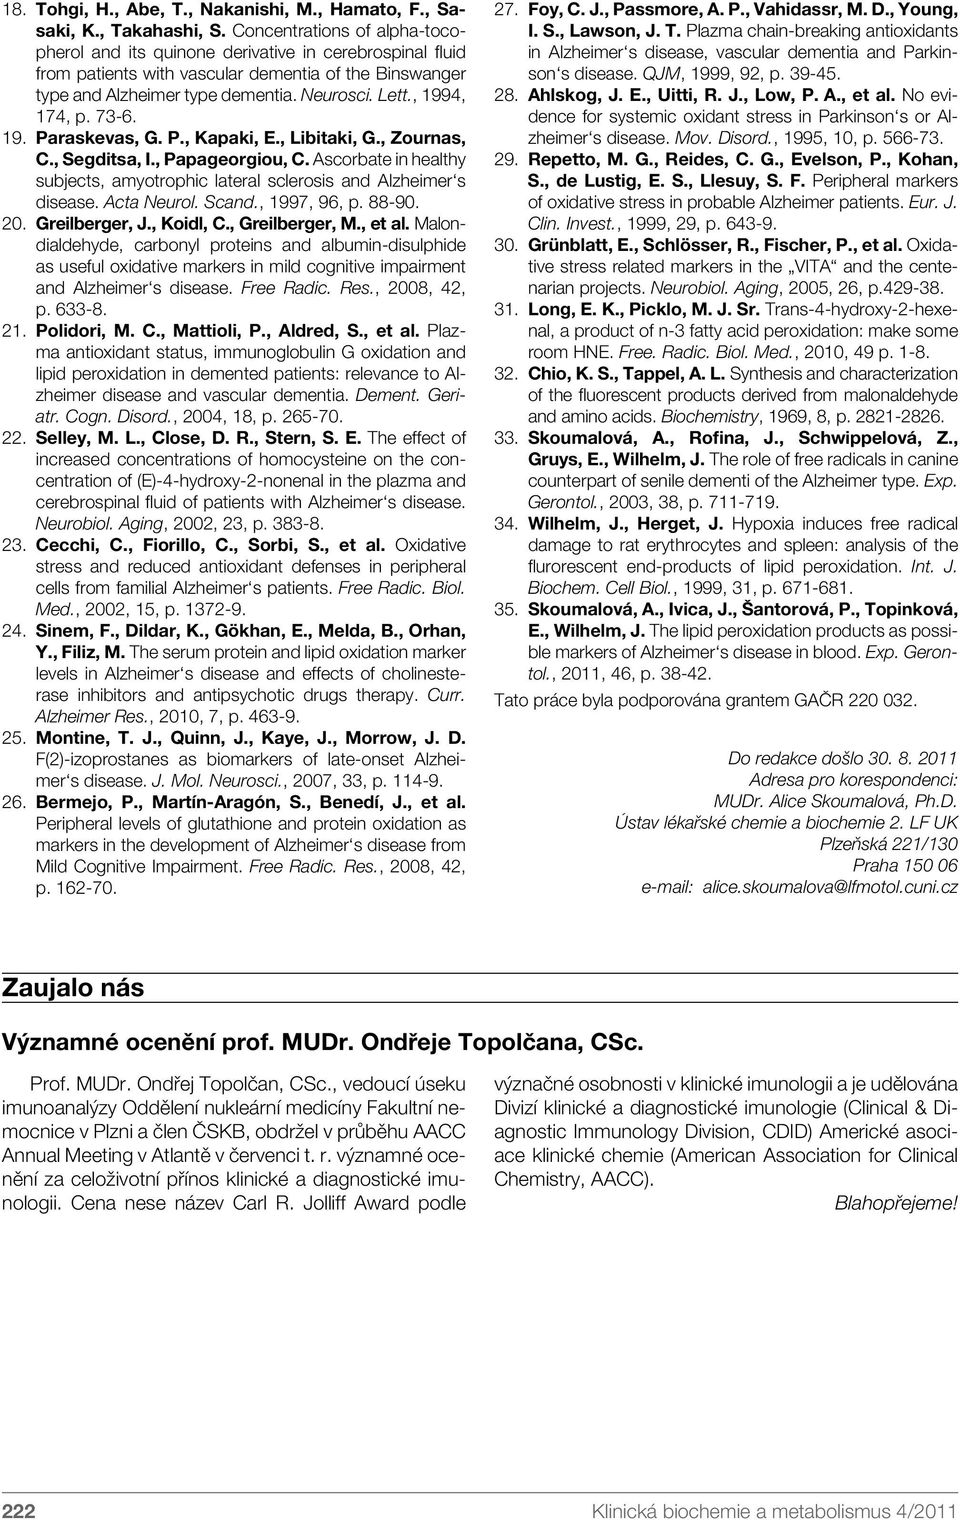 , 1994, 174, p. 73-6. 19. Paraskevas, G. P., Kapaki, E., Libitaki, G., Zournas, C., Segditsa, I., Papageorgiou, C. Ascorbate in healthy subjects, amyotrophic lateral sclerosis and Alzheimer s disease.